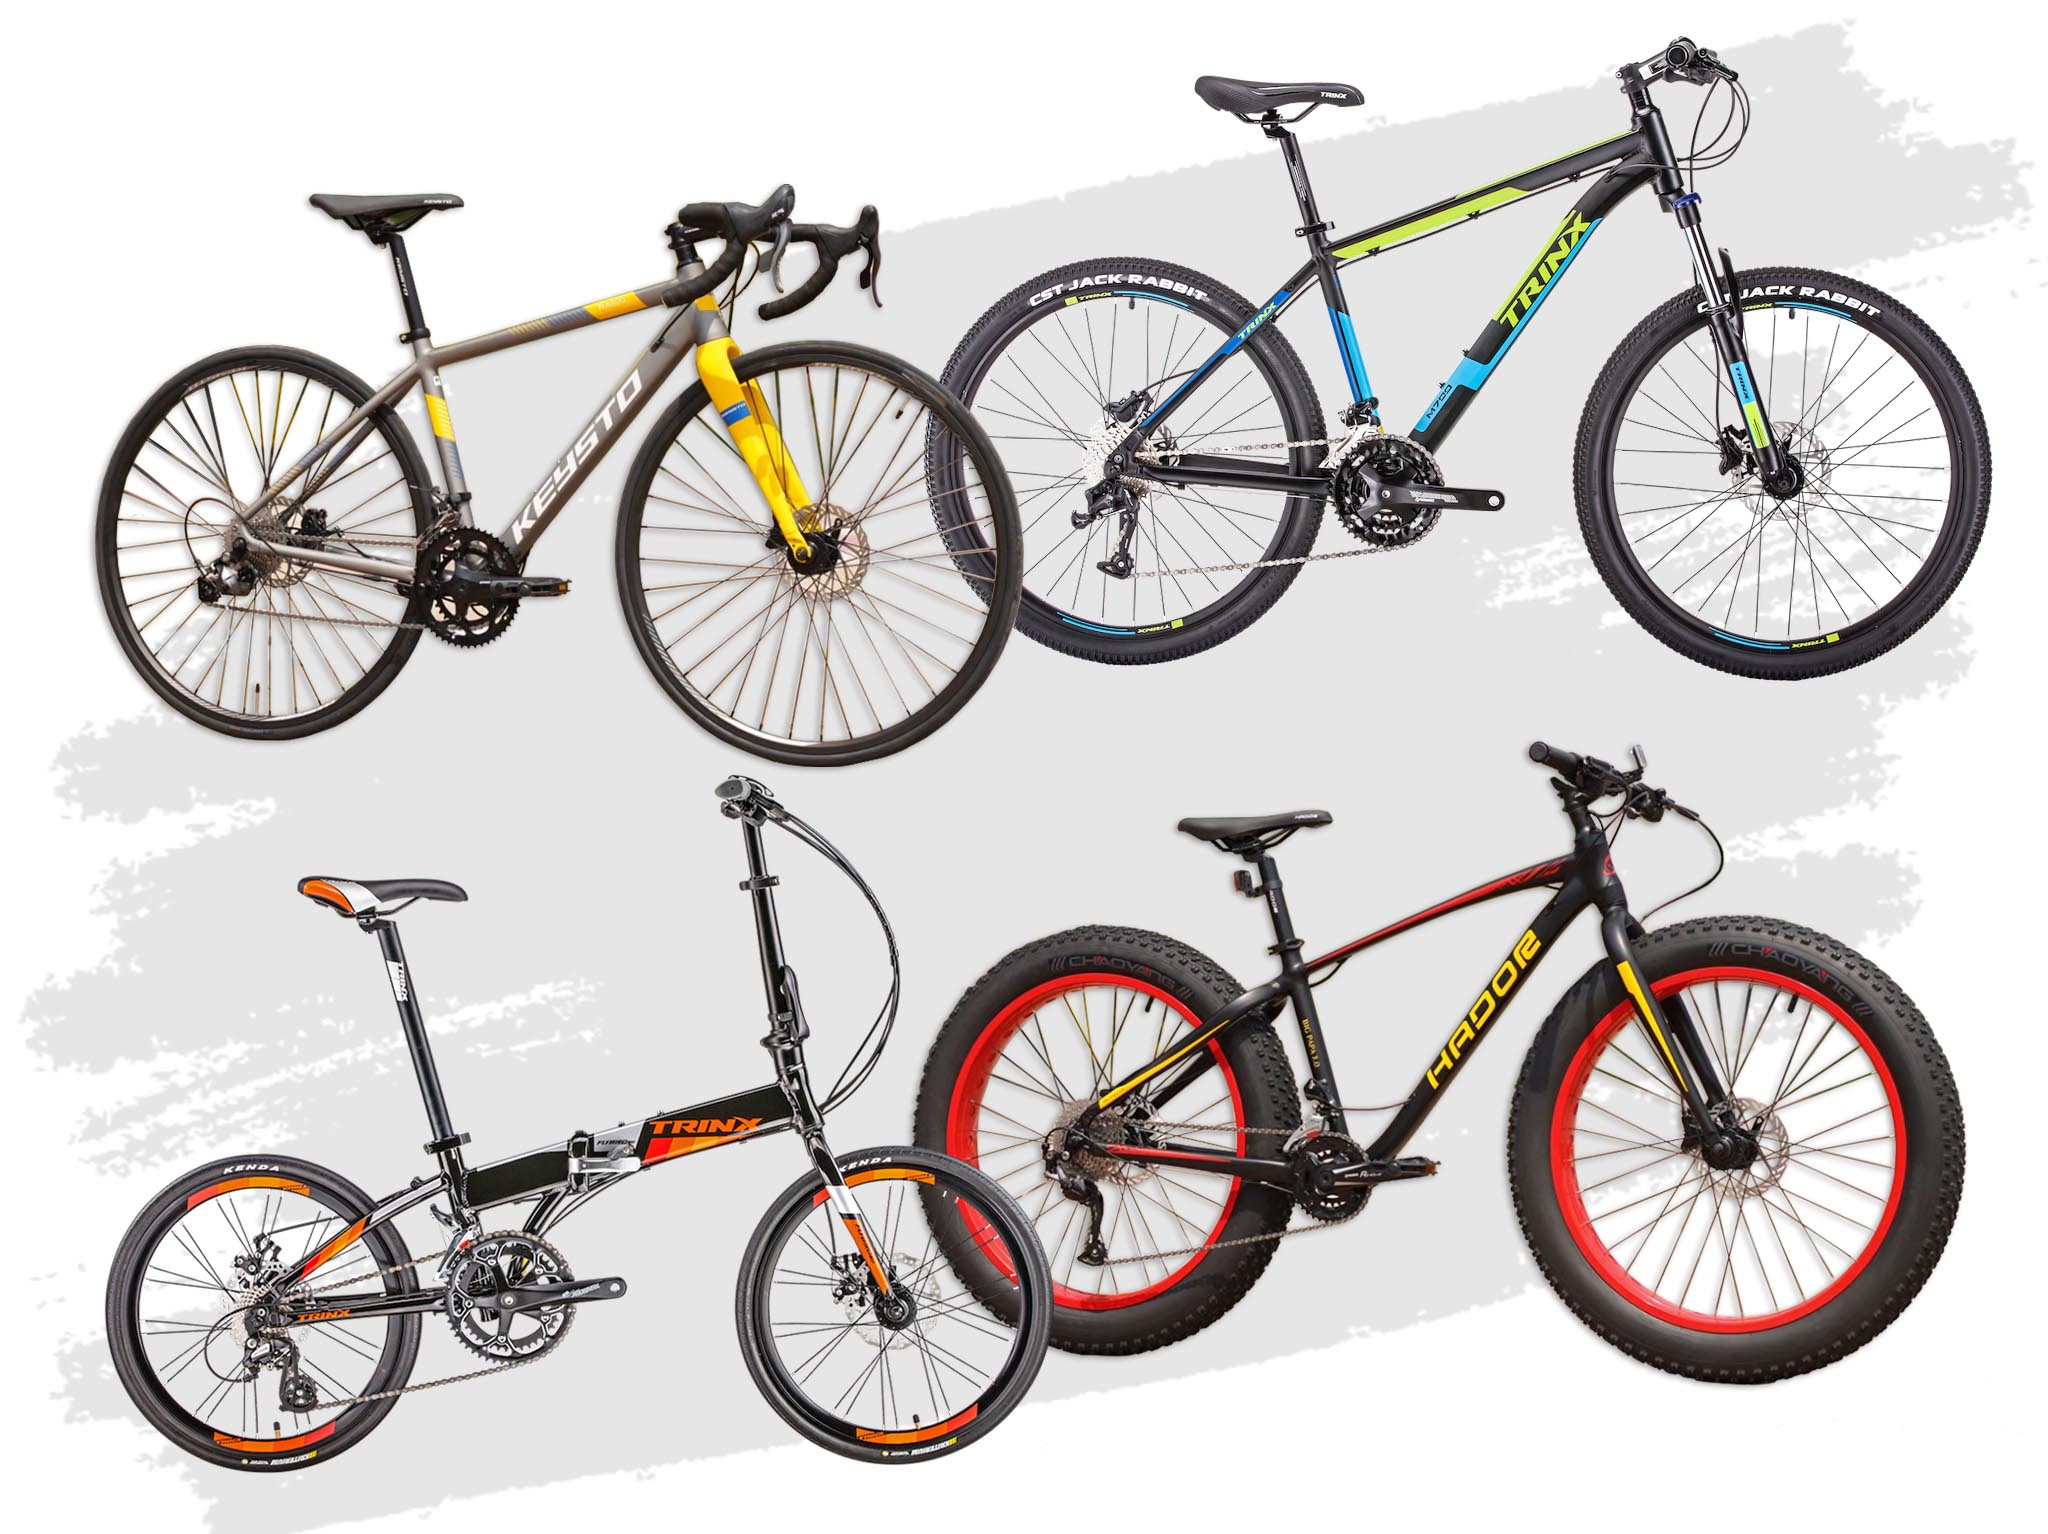 TrinX, Keysto, Hador พบกับจักรยานและอุปกรณ์เกี่ยวกับจักรยานมากมายในราคาโรงงาน ตามลิงค์ข้างล่างได้เลย